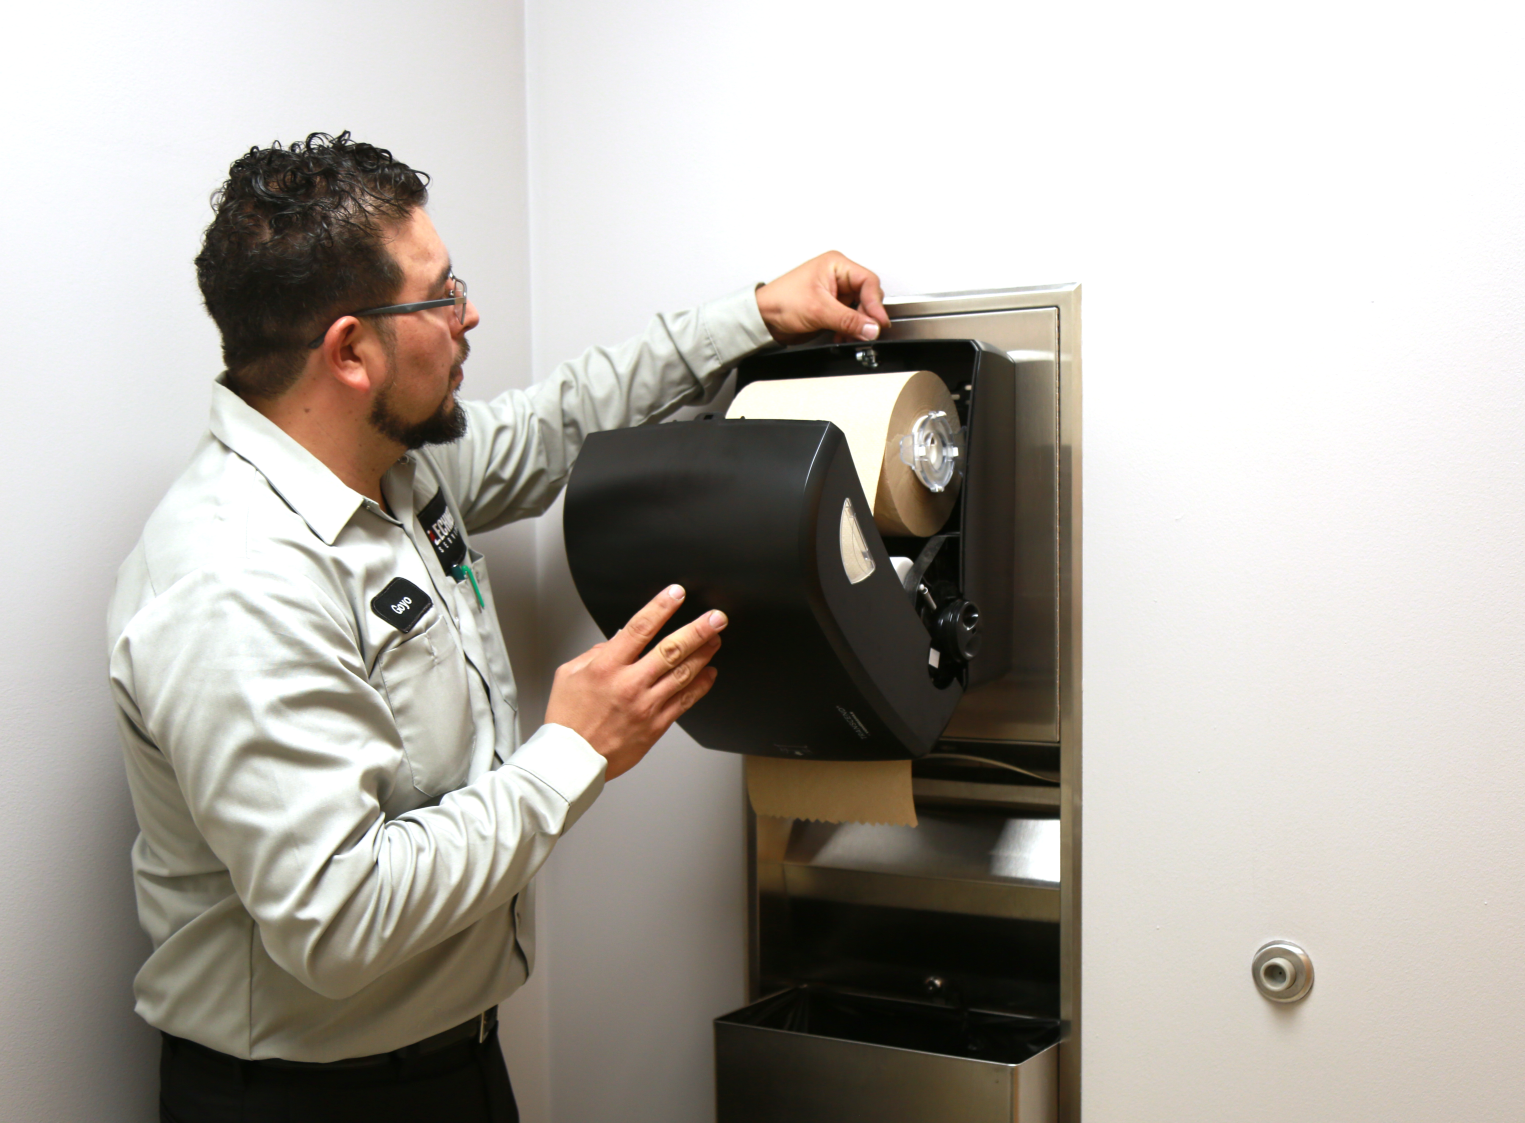 A Lechner Route Service Representative servicing a Transcend restroom towel dispenser